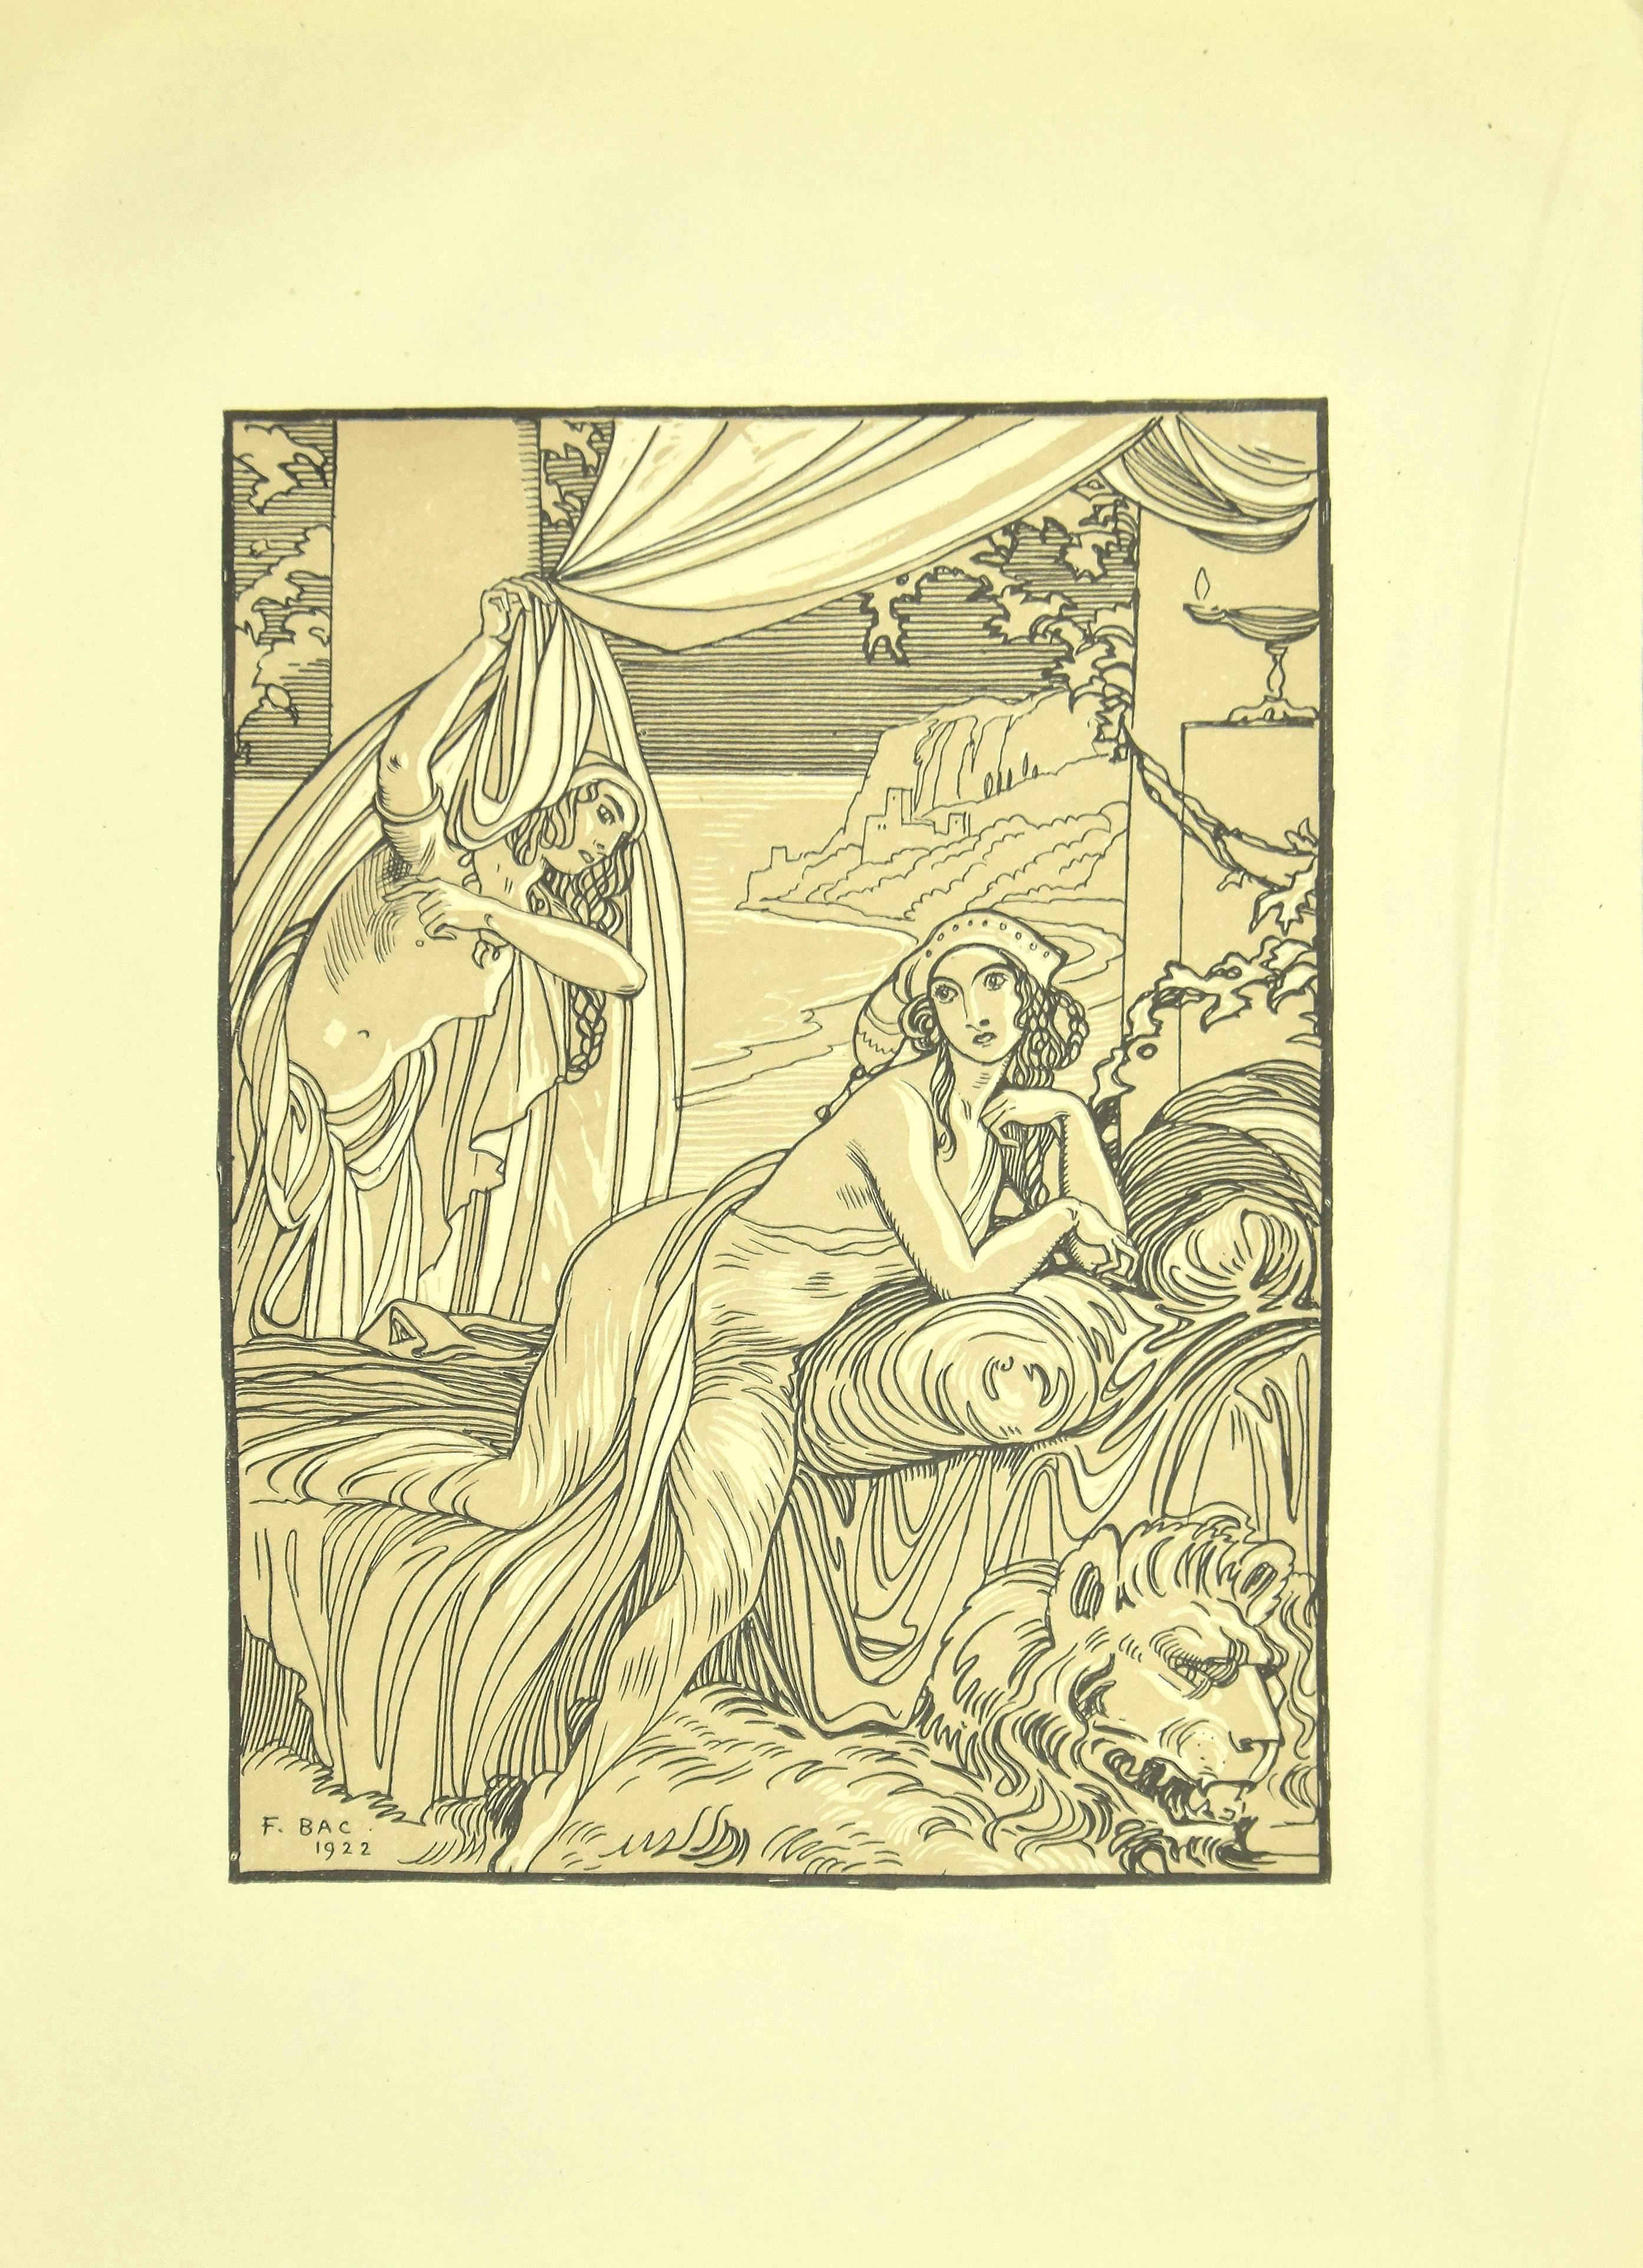 Ferdinand Bac Figurative Print - The Thoughtful - Original Lithograph by F. Bac - 1922